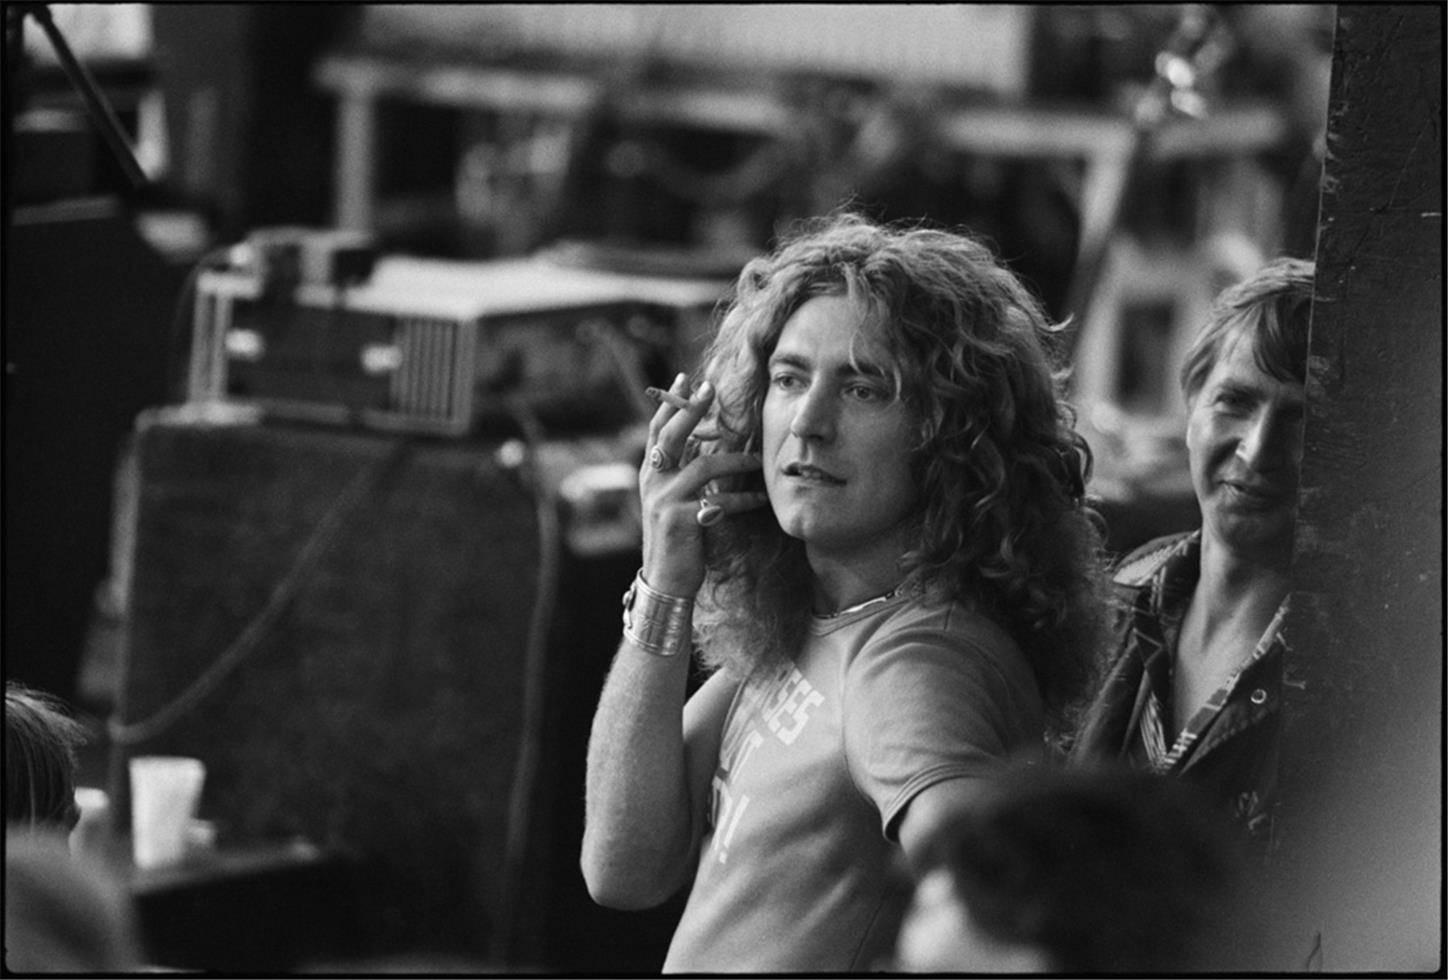 Michael Zagaris Black and White Photograph - Robert Plant